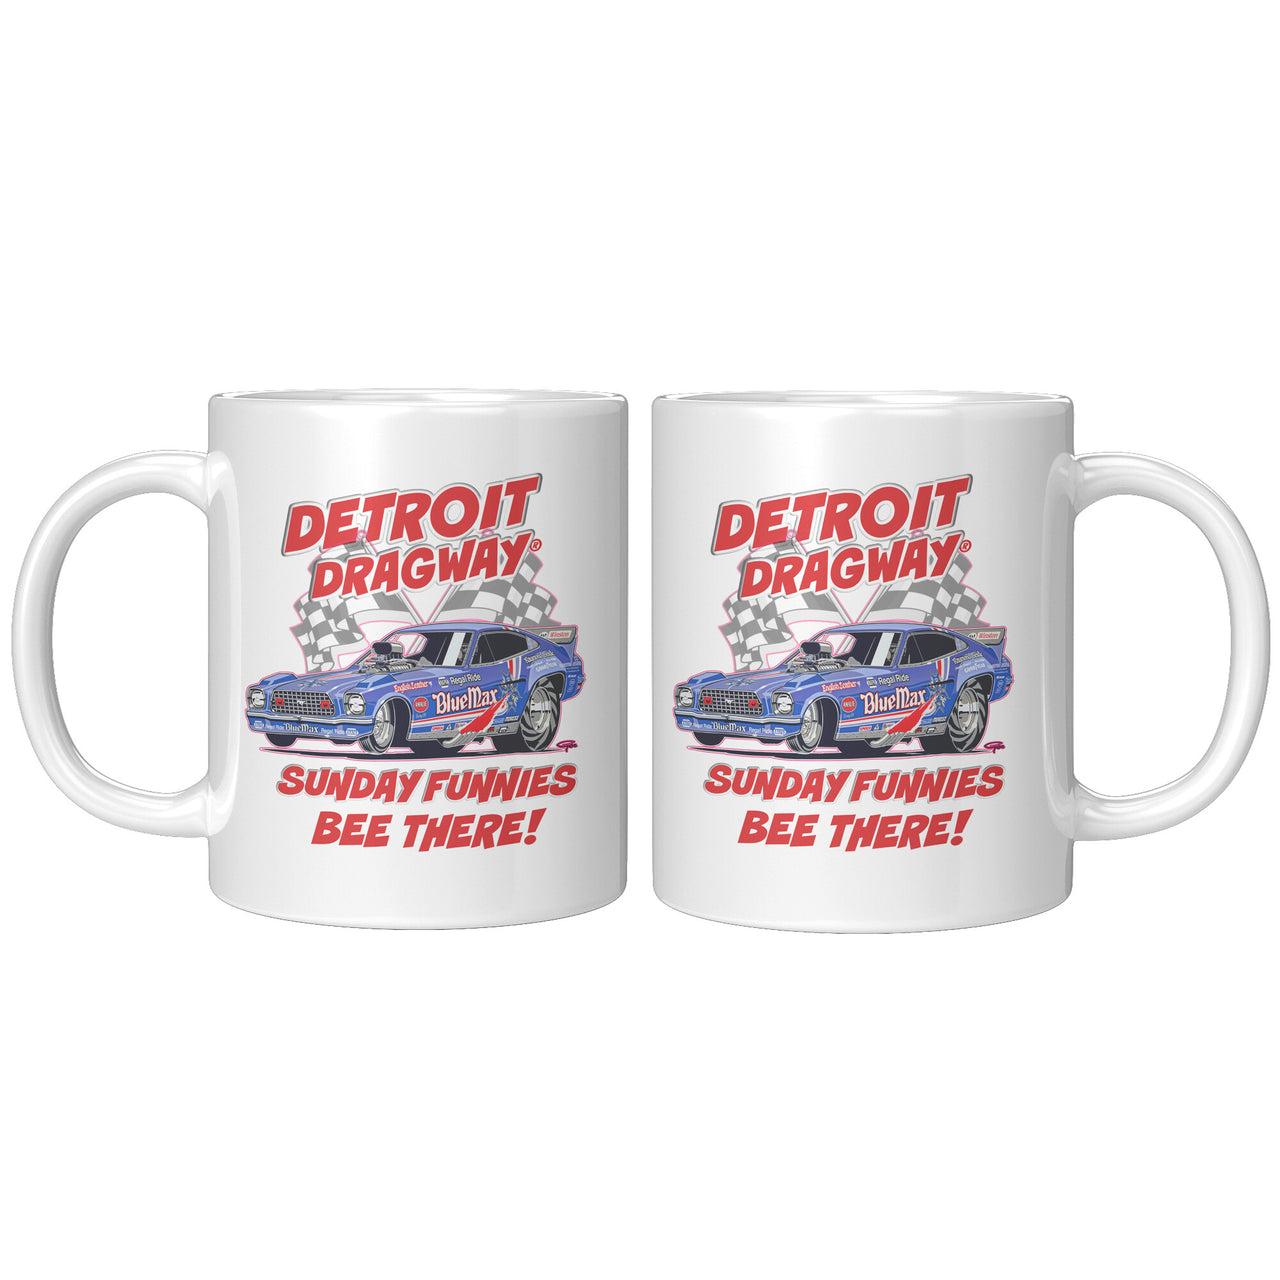 *Detroit Dragway® Sunday Funnies Max Mug